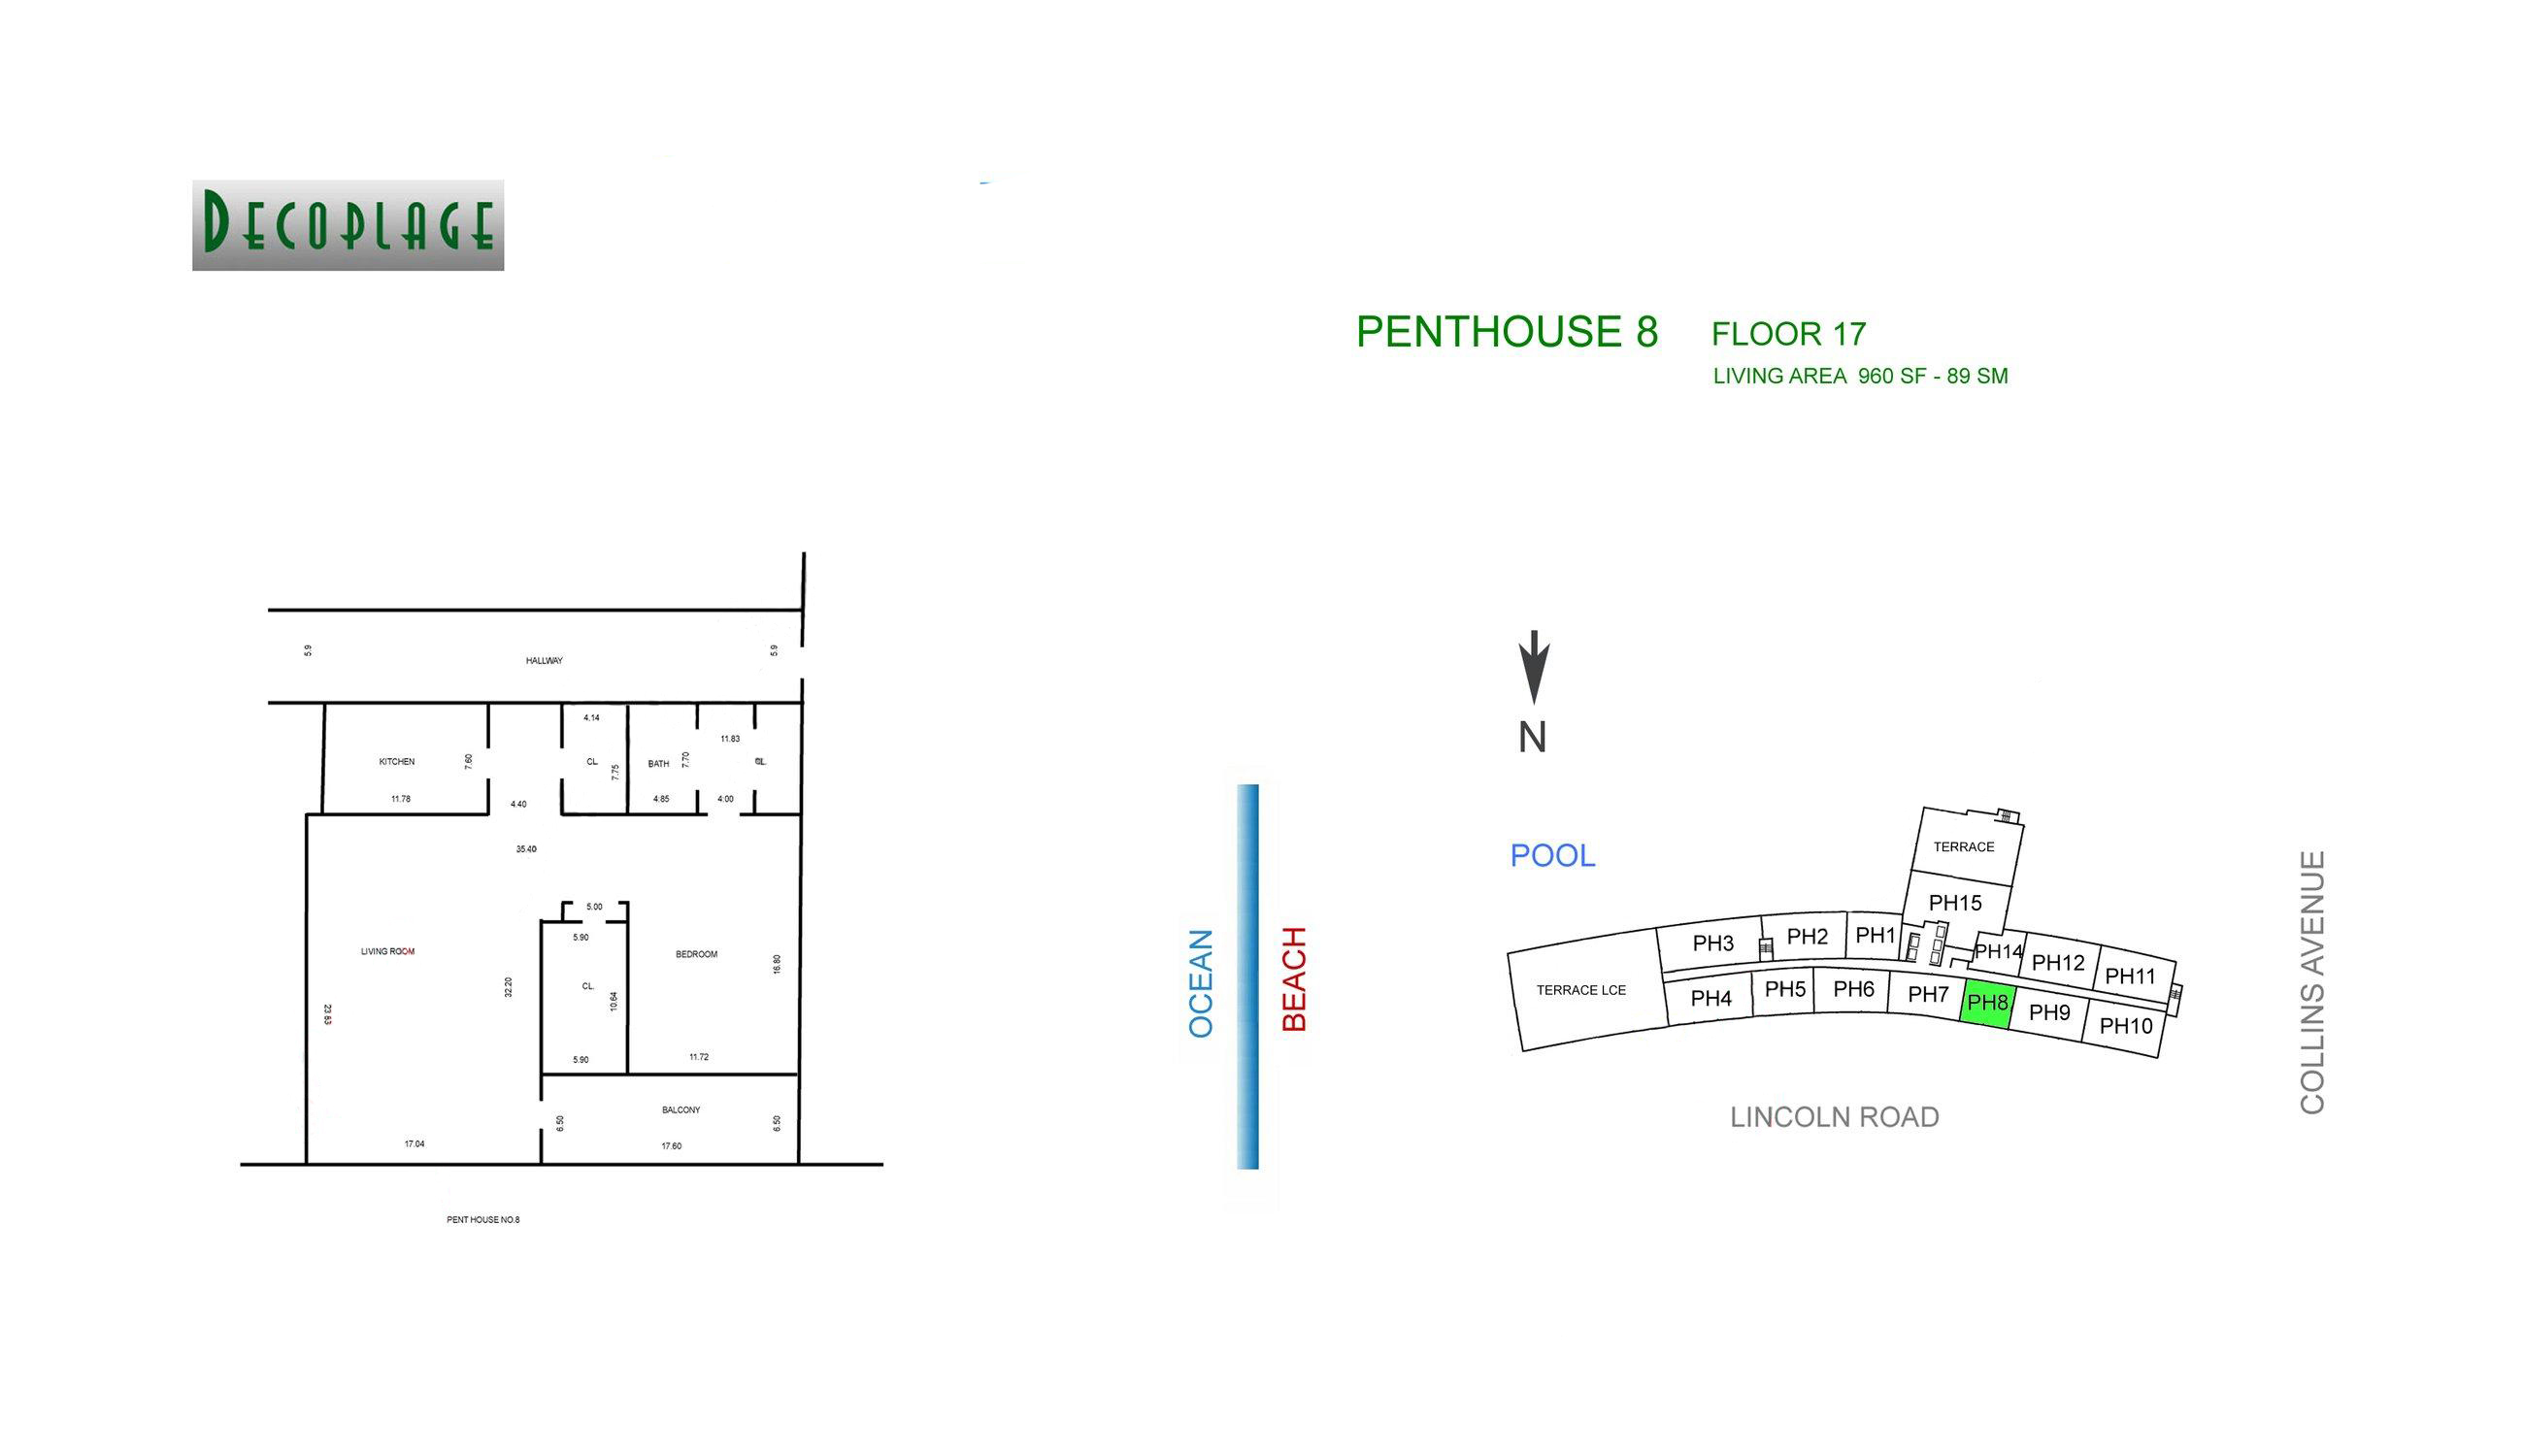 Decoplage Penthouse 8 Floors 17